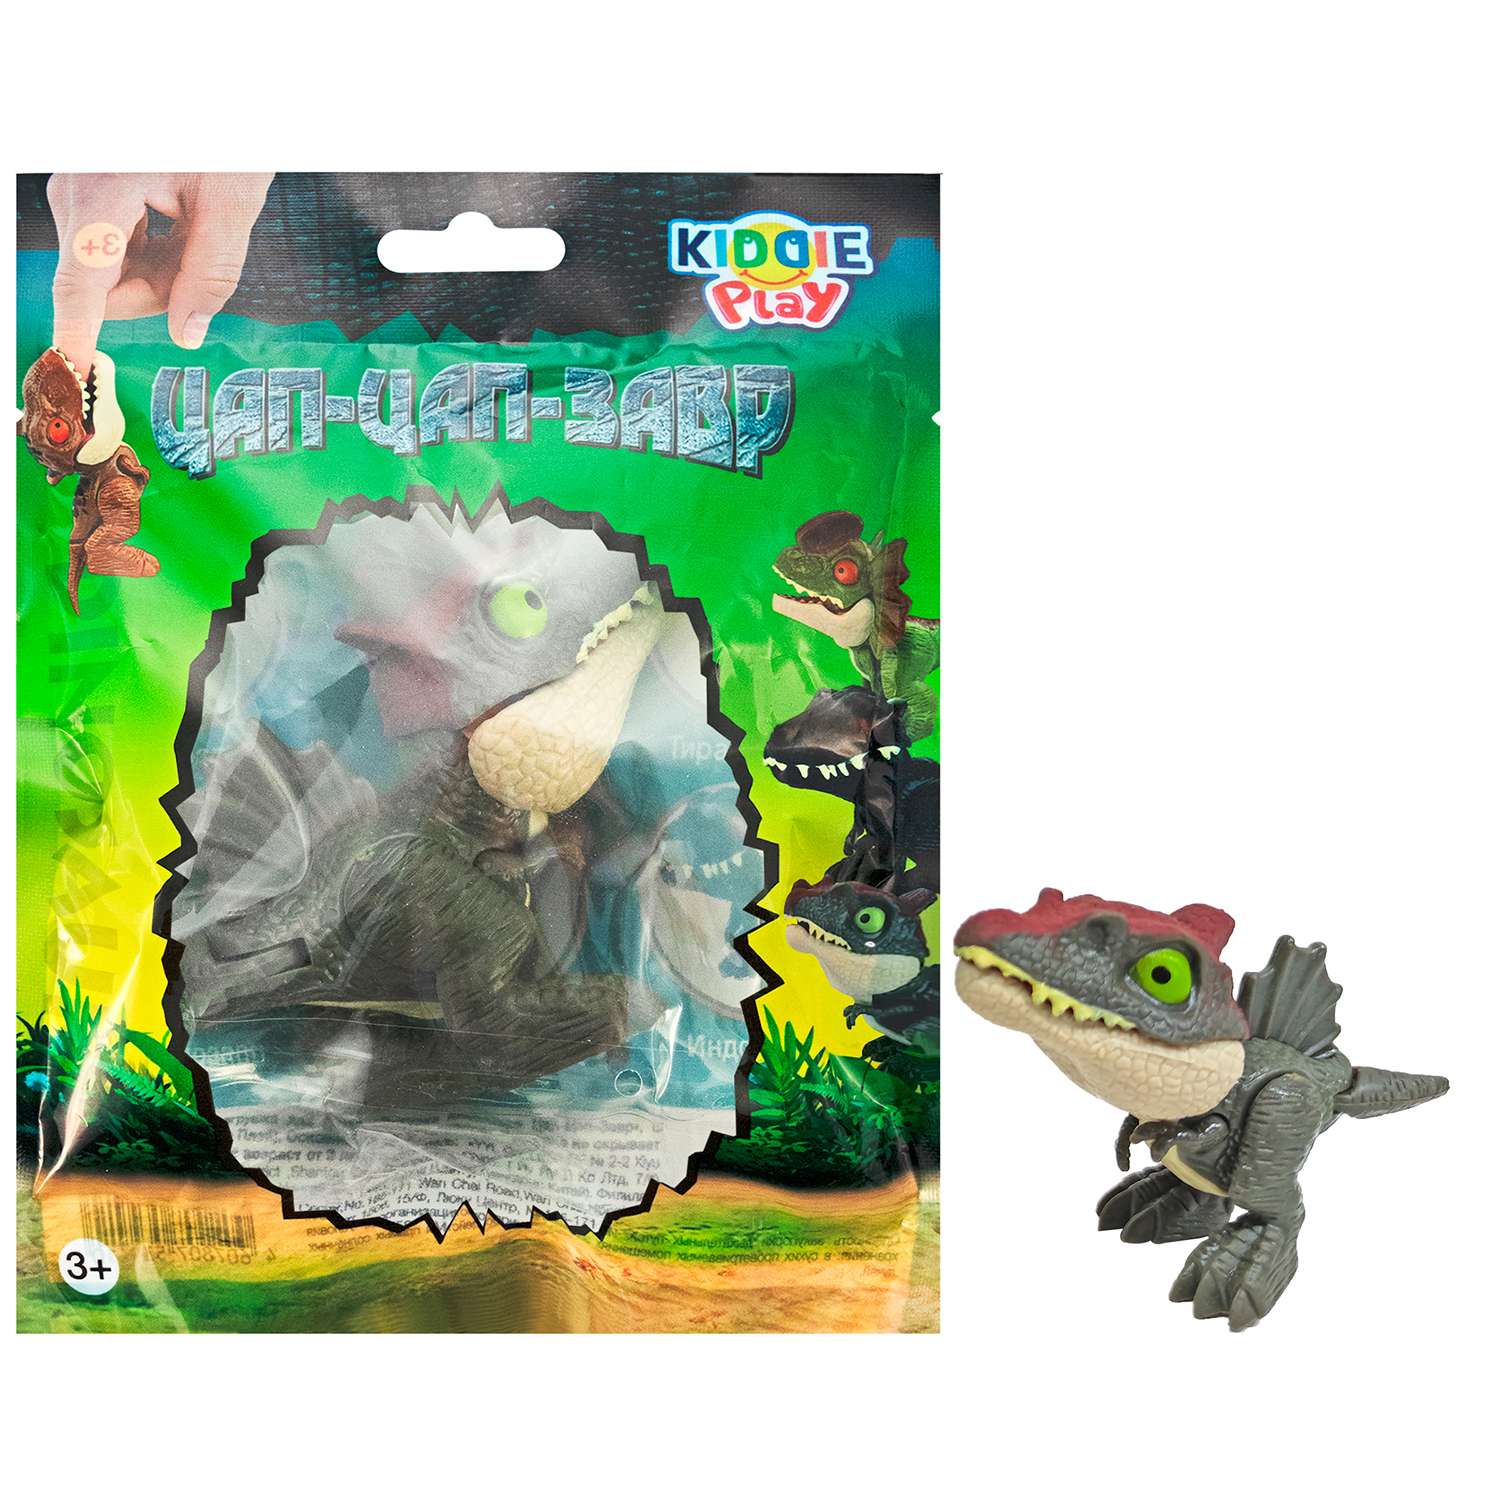 Игрушка KiddiePlay KiddiePlay Фигурка динозавра Цап-Цап-Завр в ассортименте 12605 - фото 10